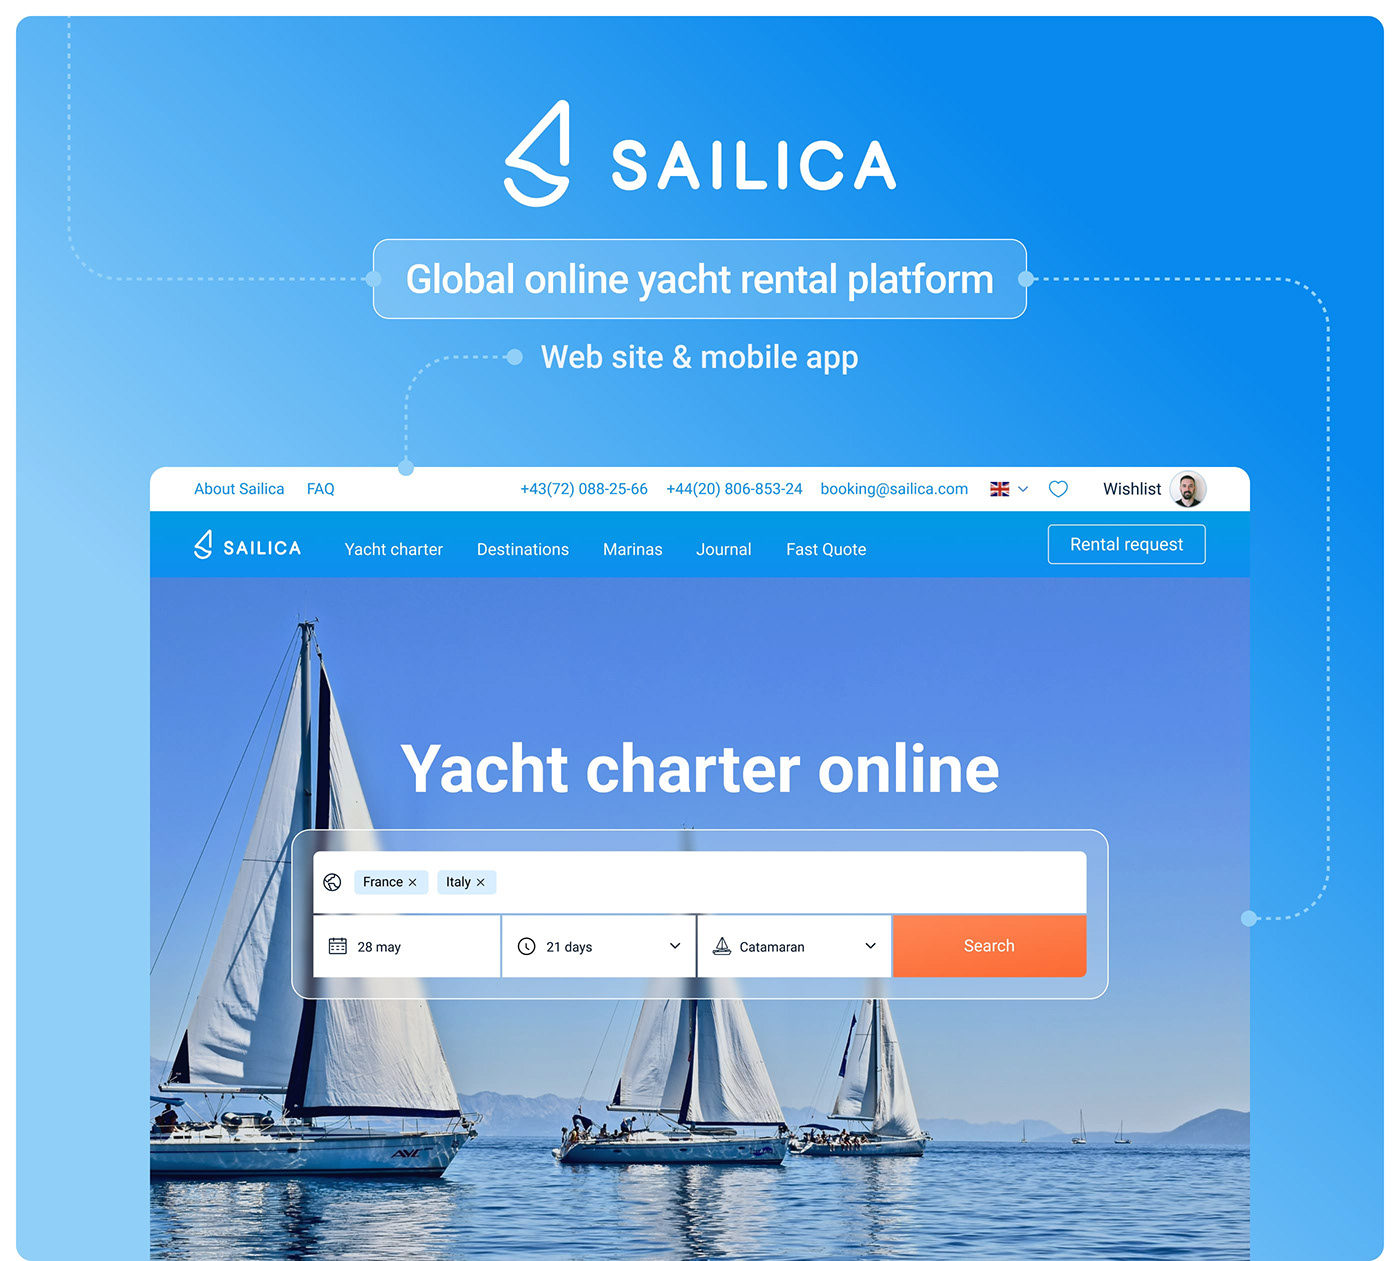 Global online yacht rental platform